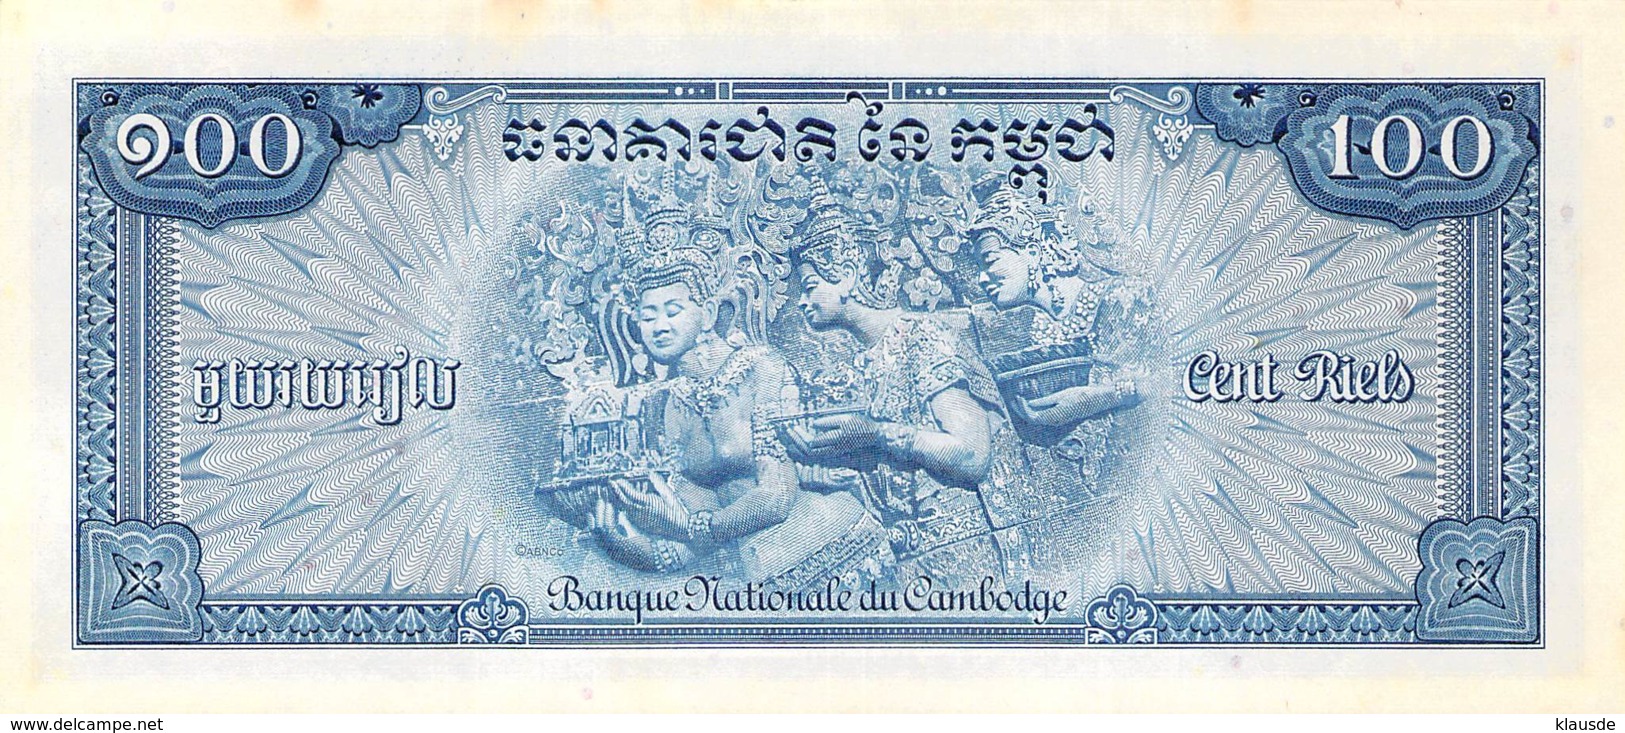 100 Cent Riels Banknote Kambodscha - Cambodge